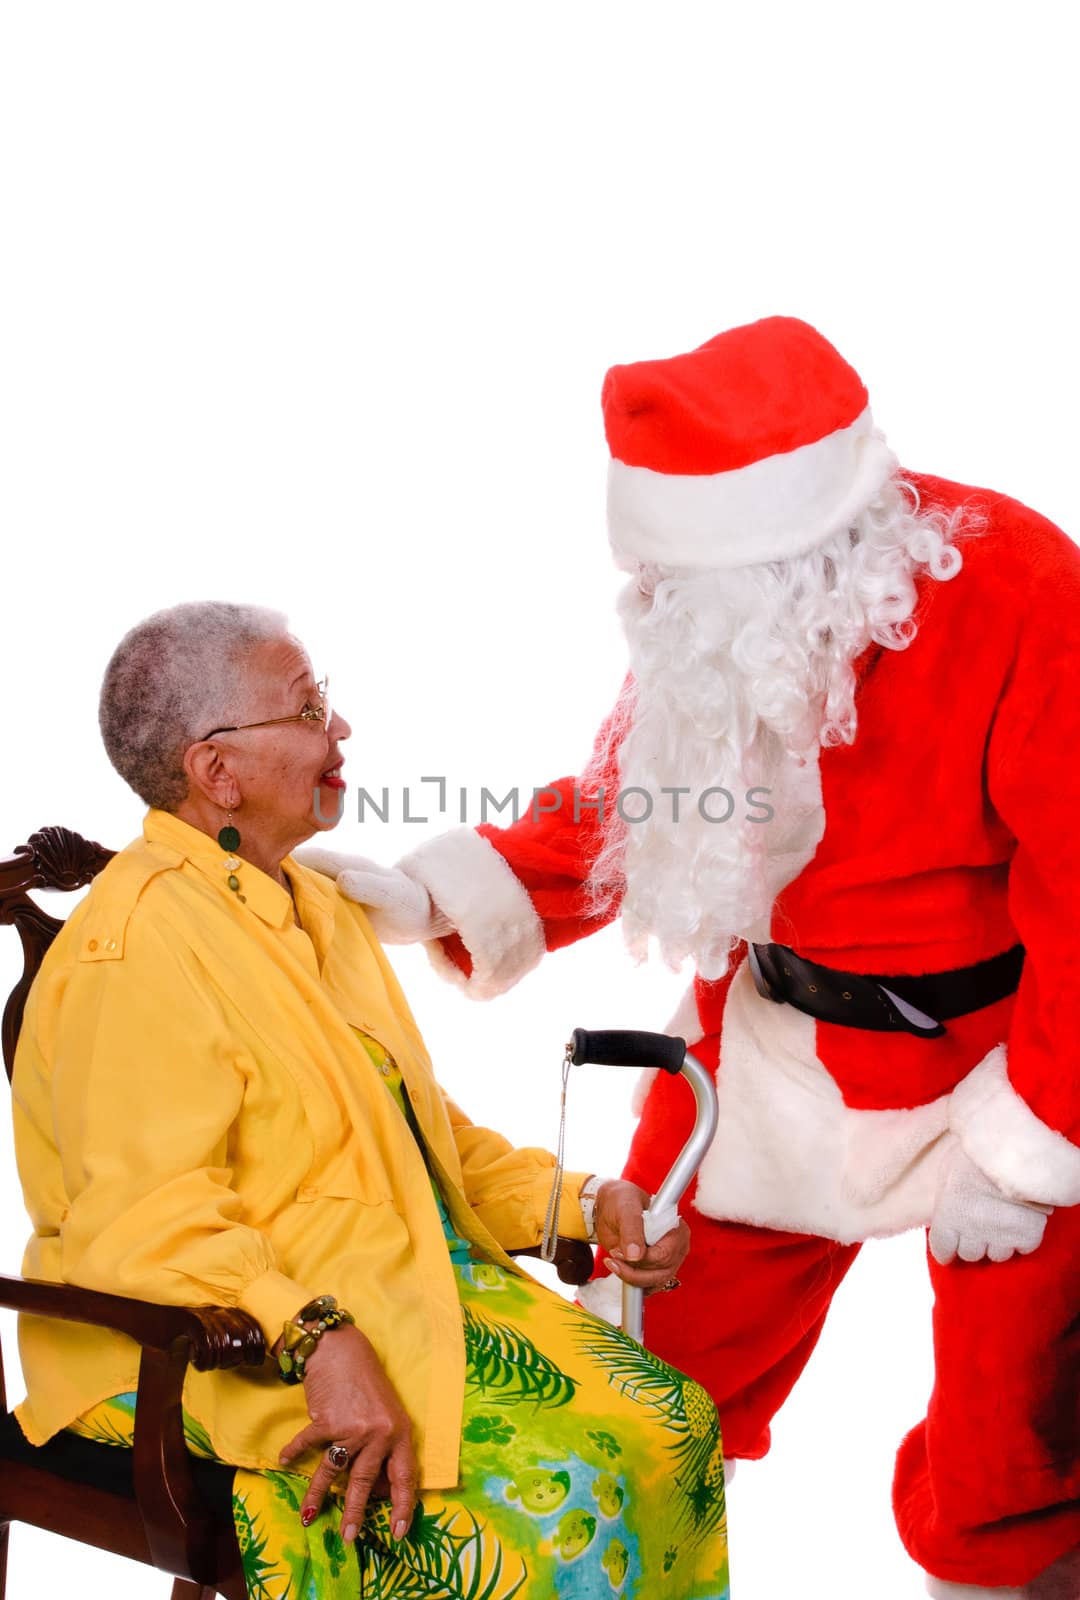 Santa and senior citizen by jeffbanke